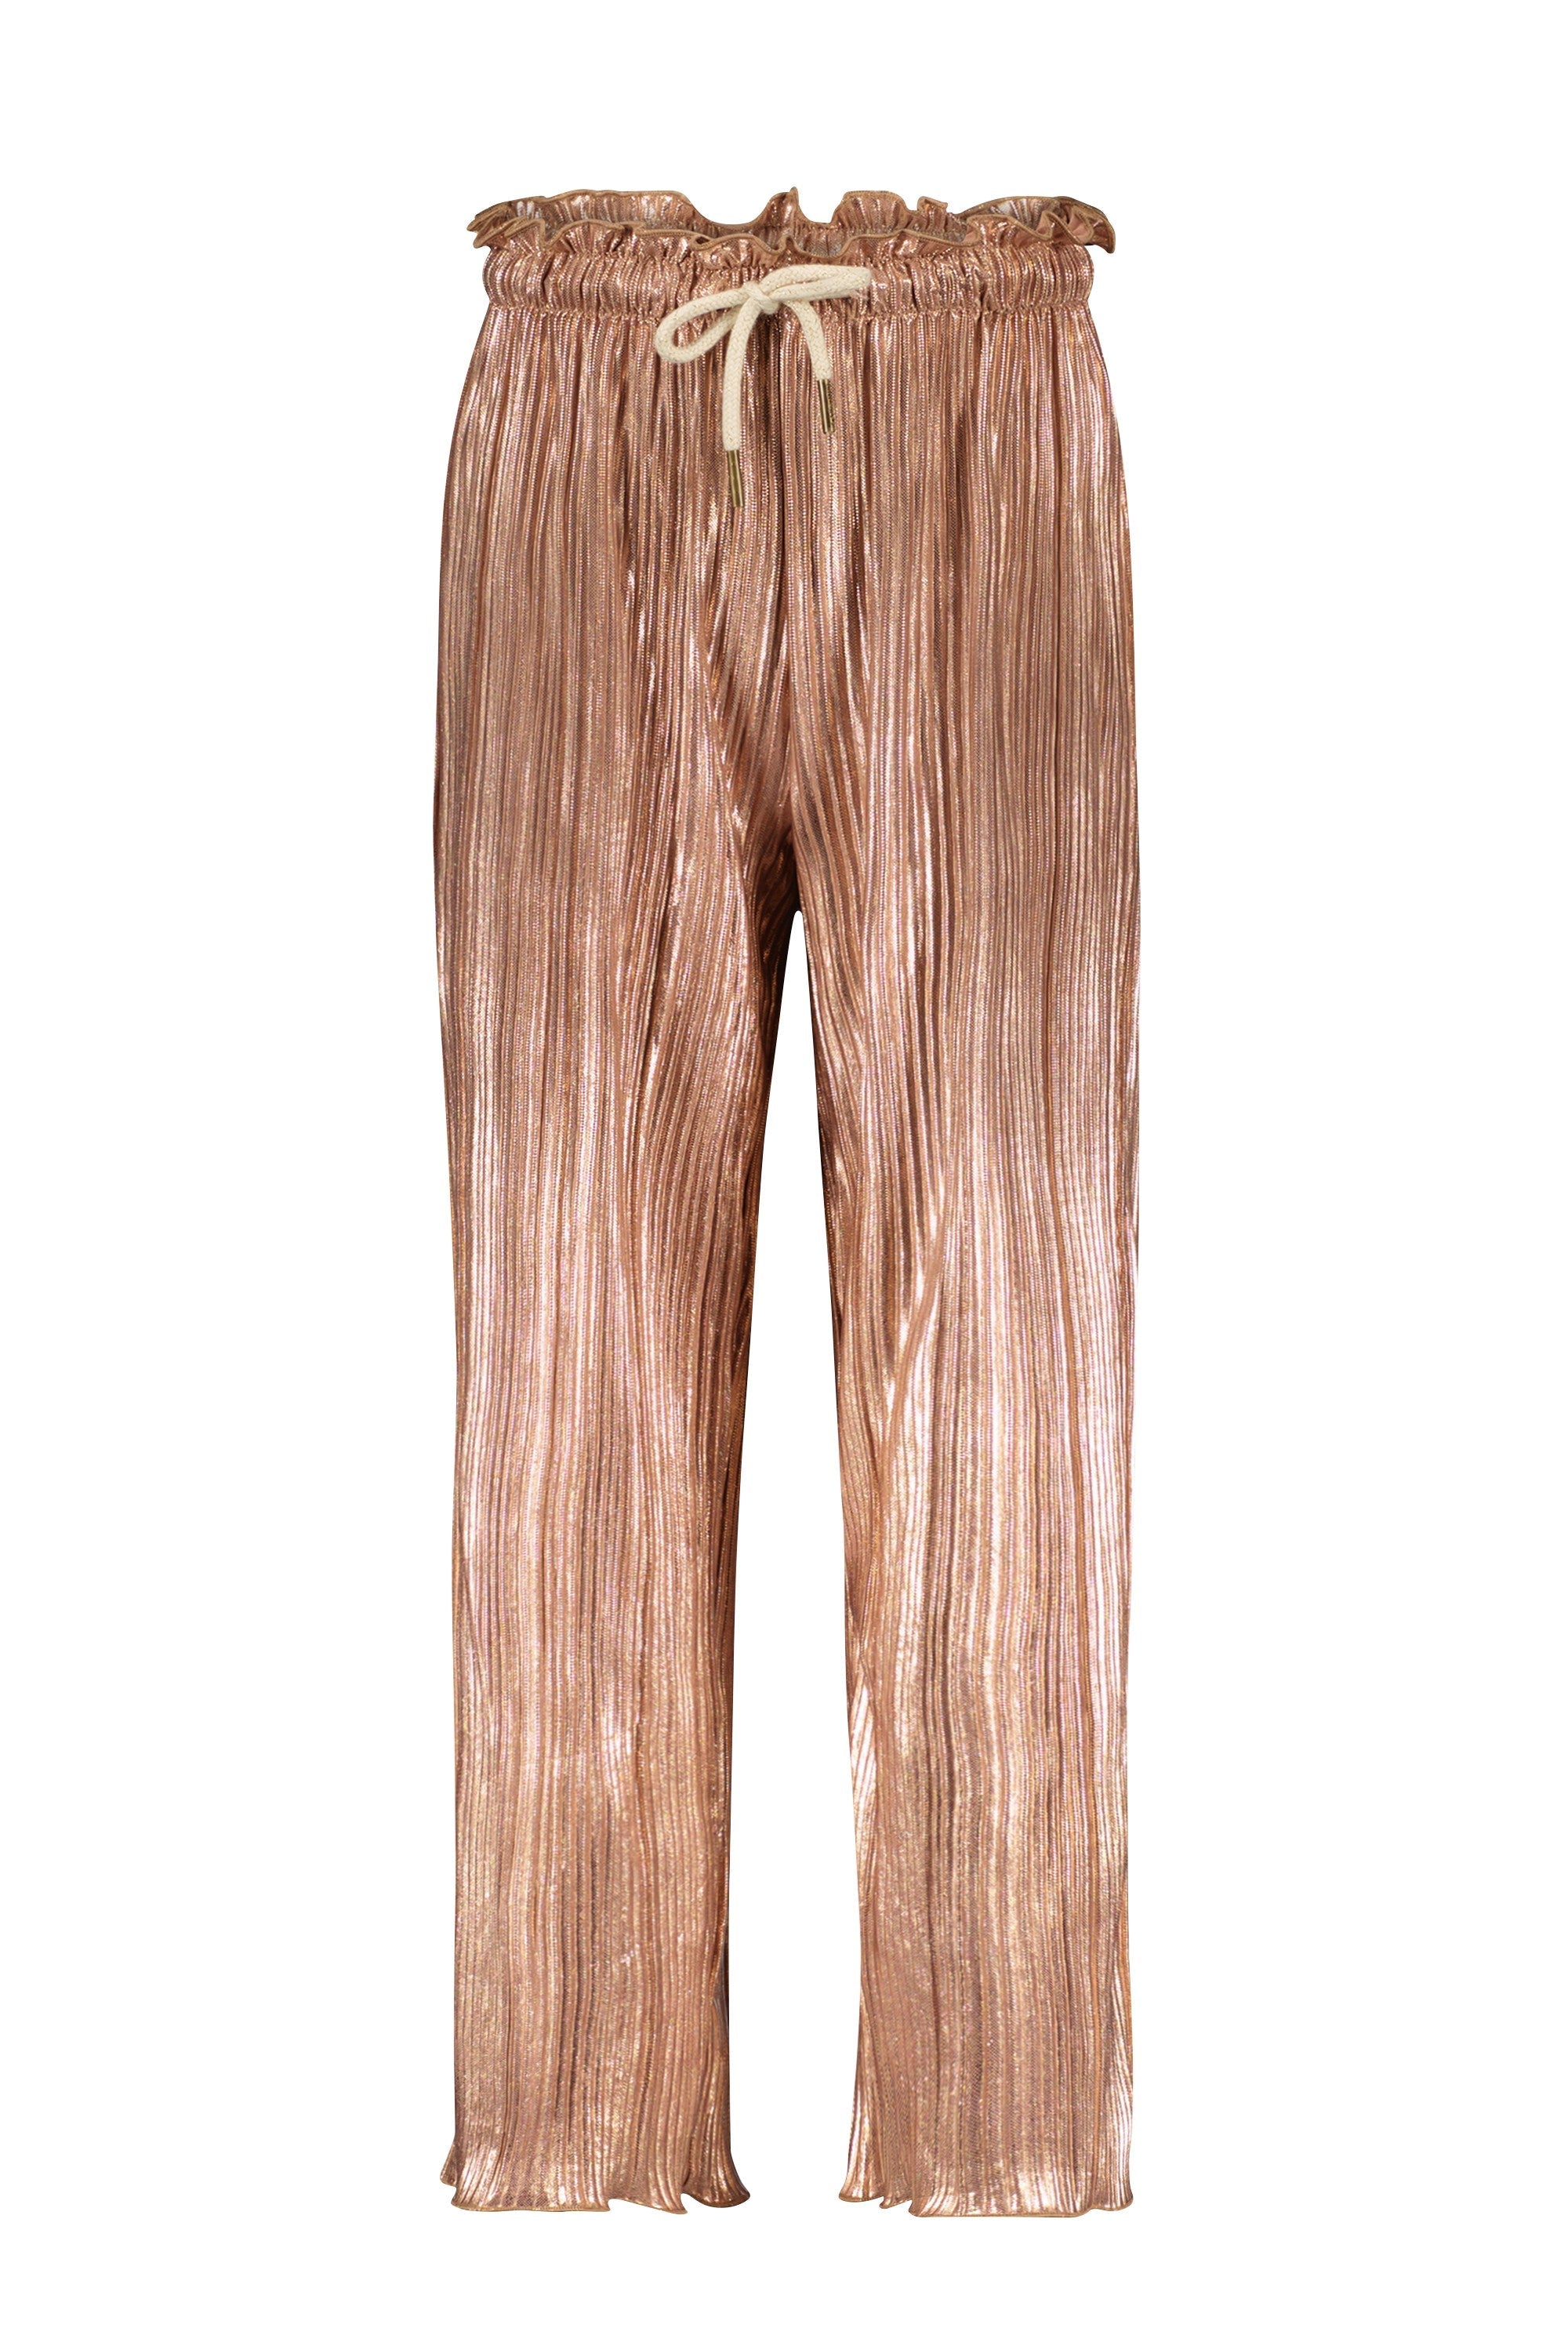 Meisjes Metallic Plisse Pants van Like Flo in de kleur Rose Lurex in maat 140.